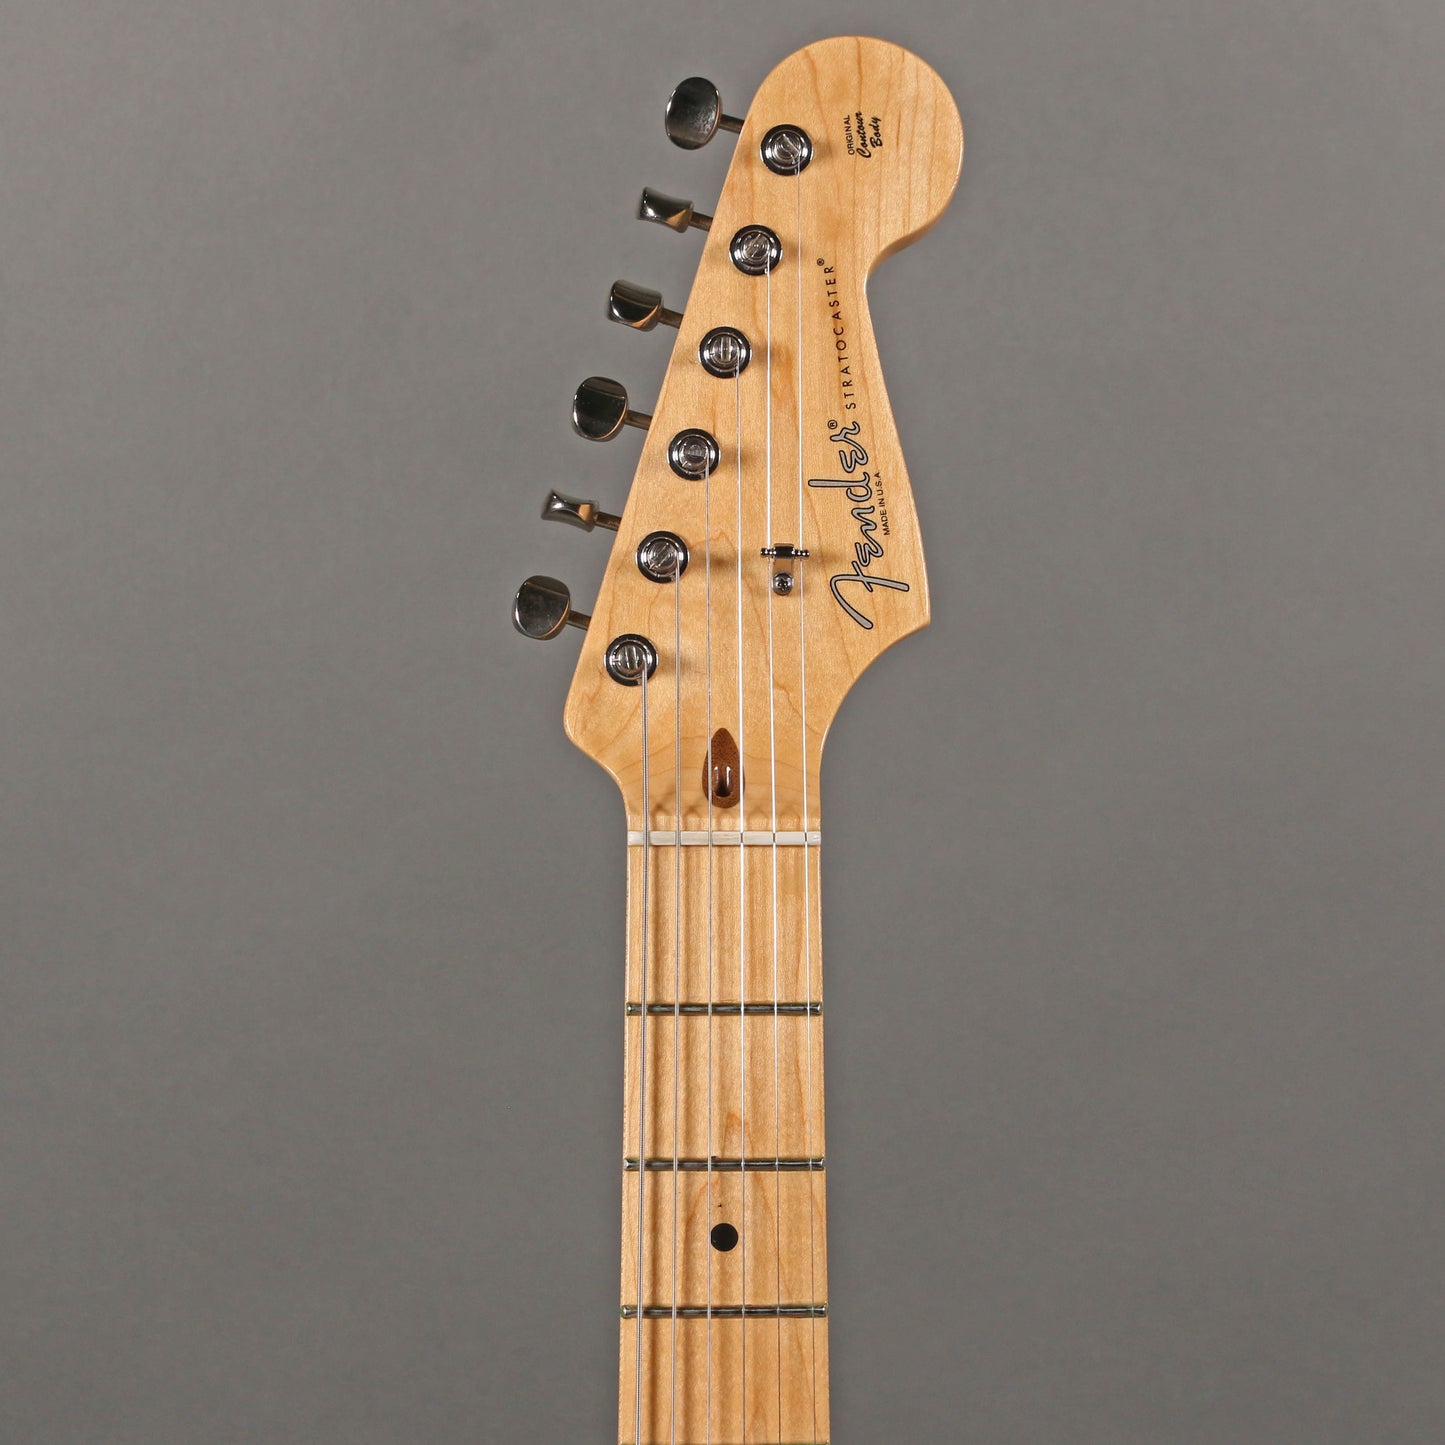 2013 Fender American Standard Stratocaster